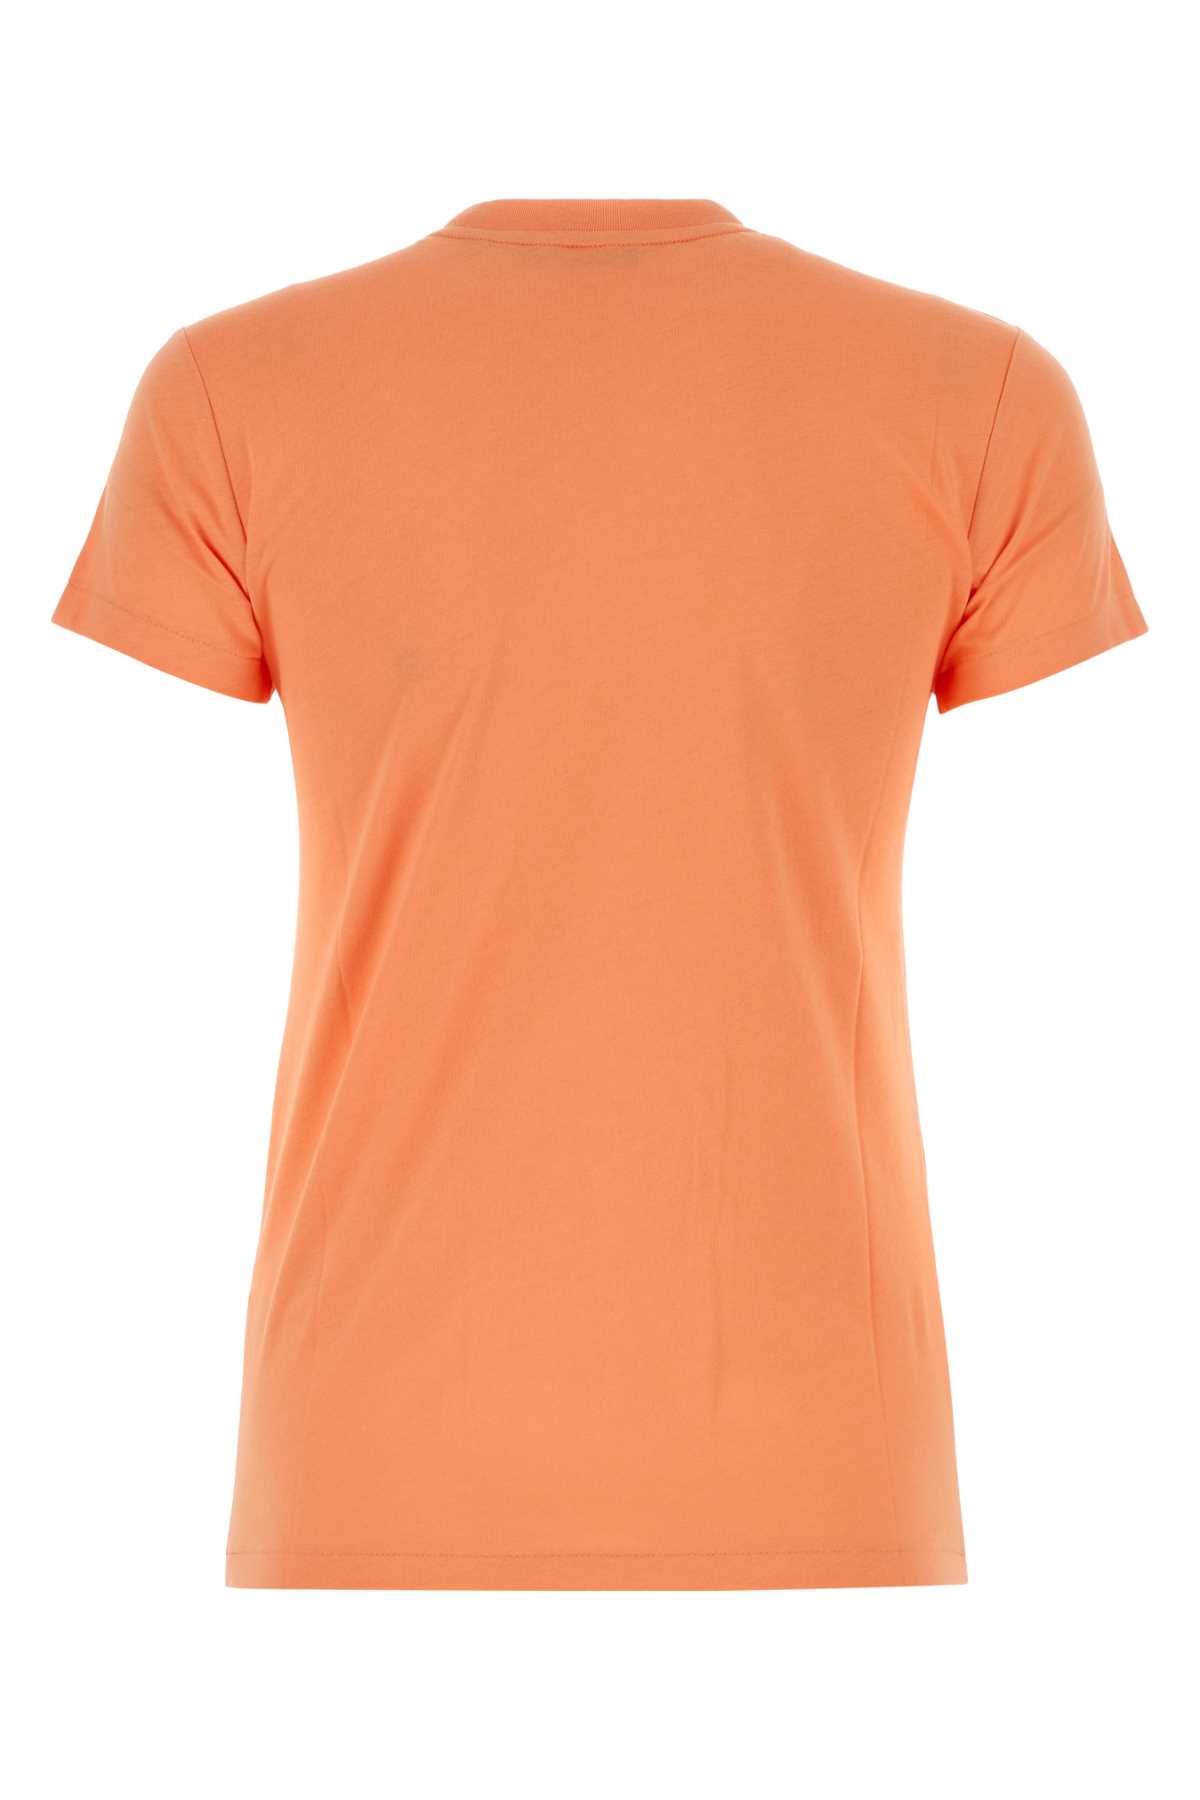 Polo Ralph Lauren Orange Cotton T-shirt In Peachtree